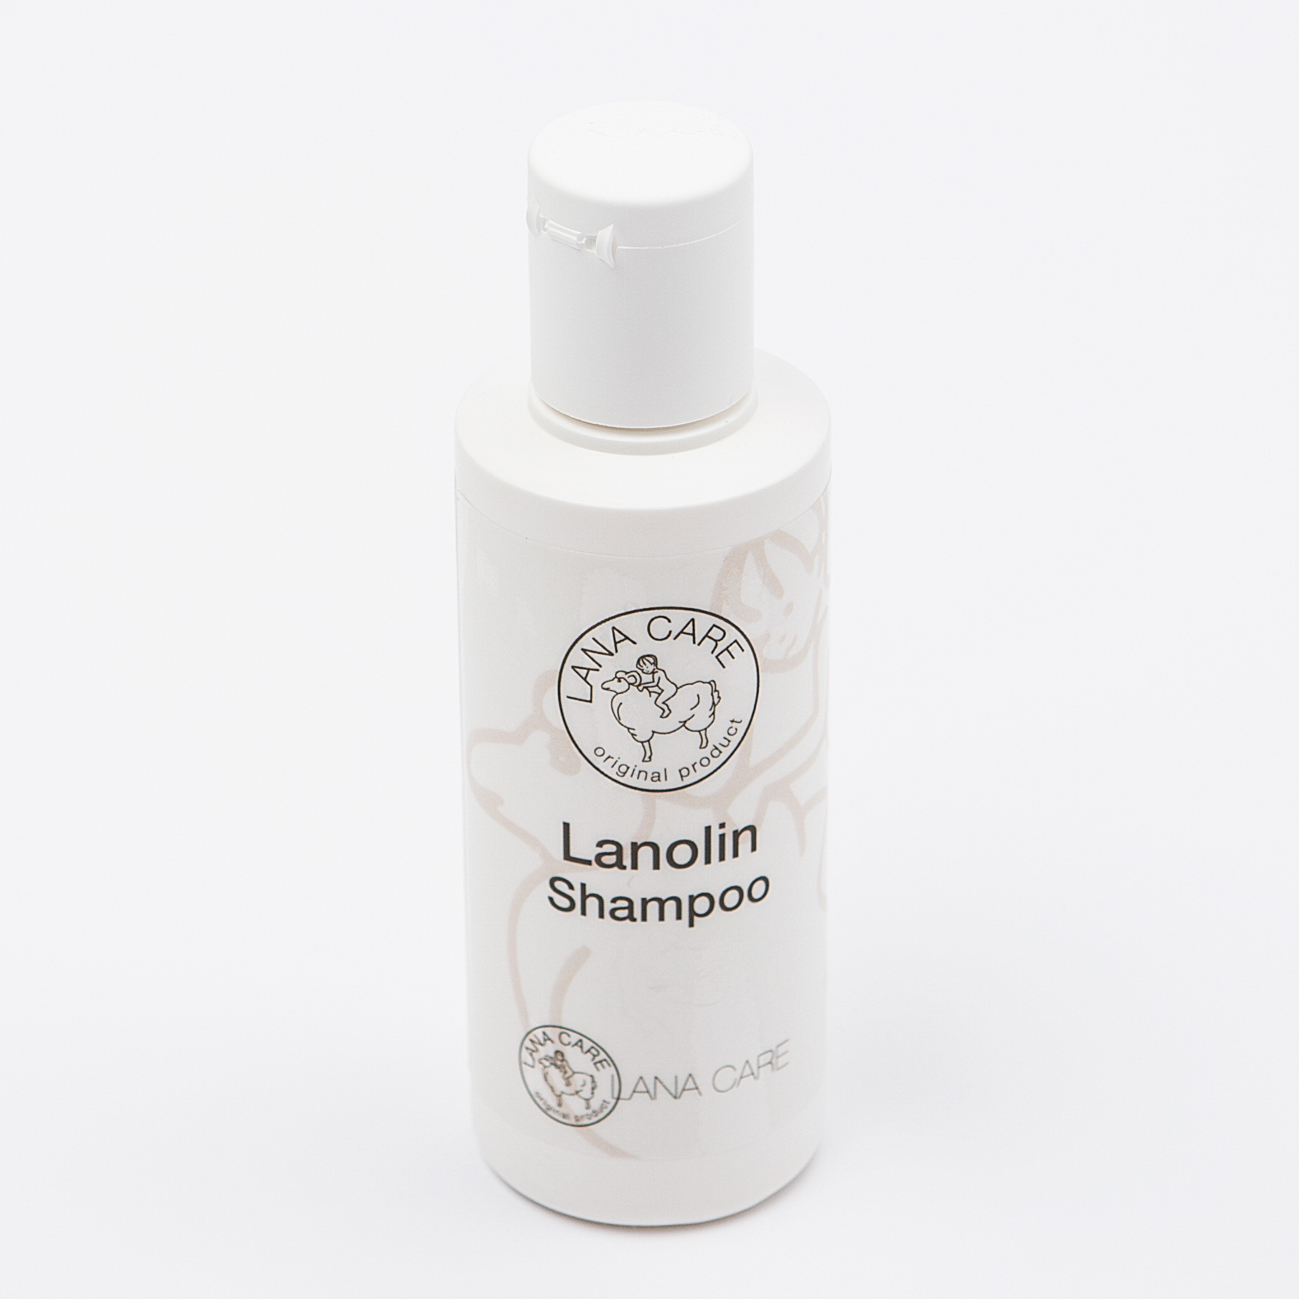 Lanolin shampoo